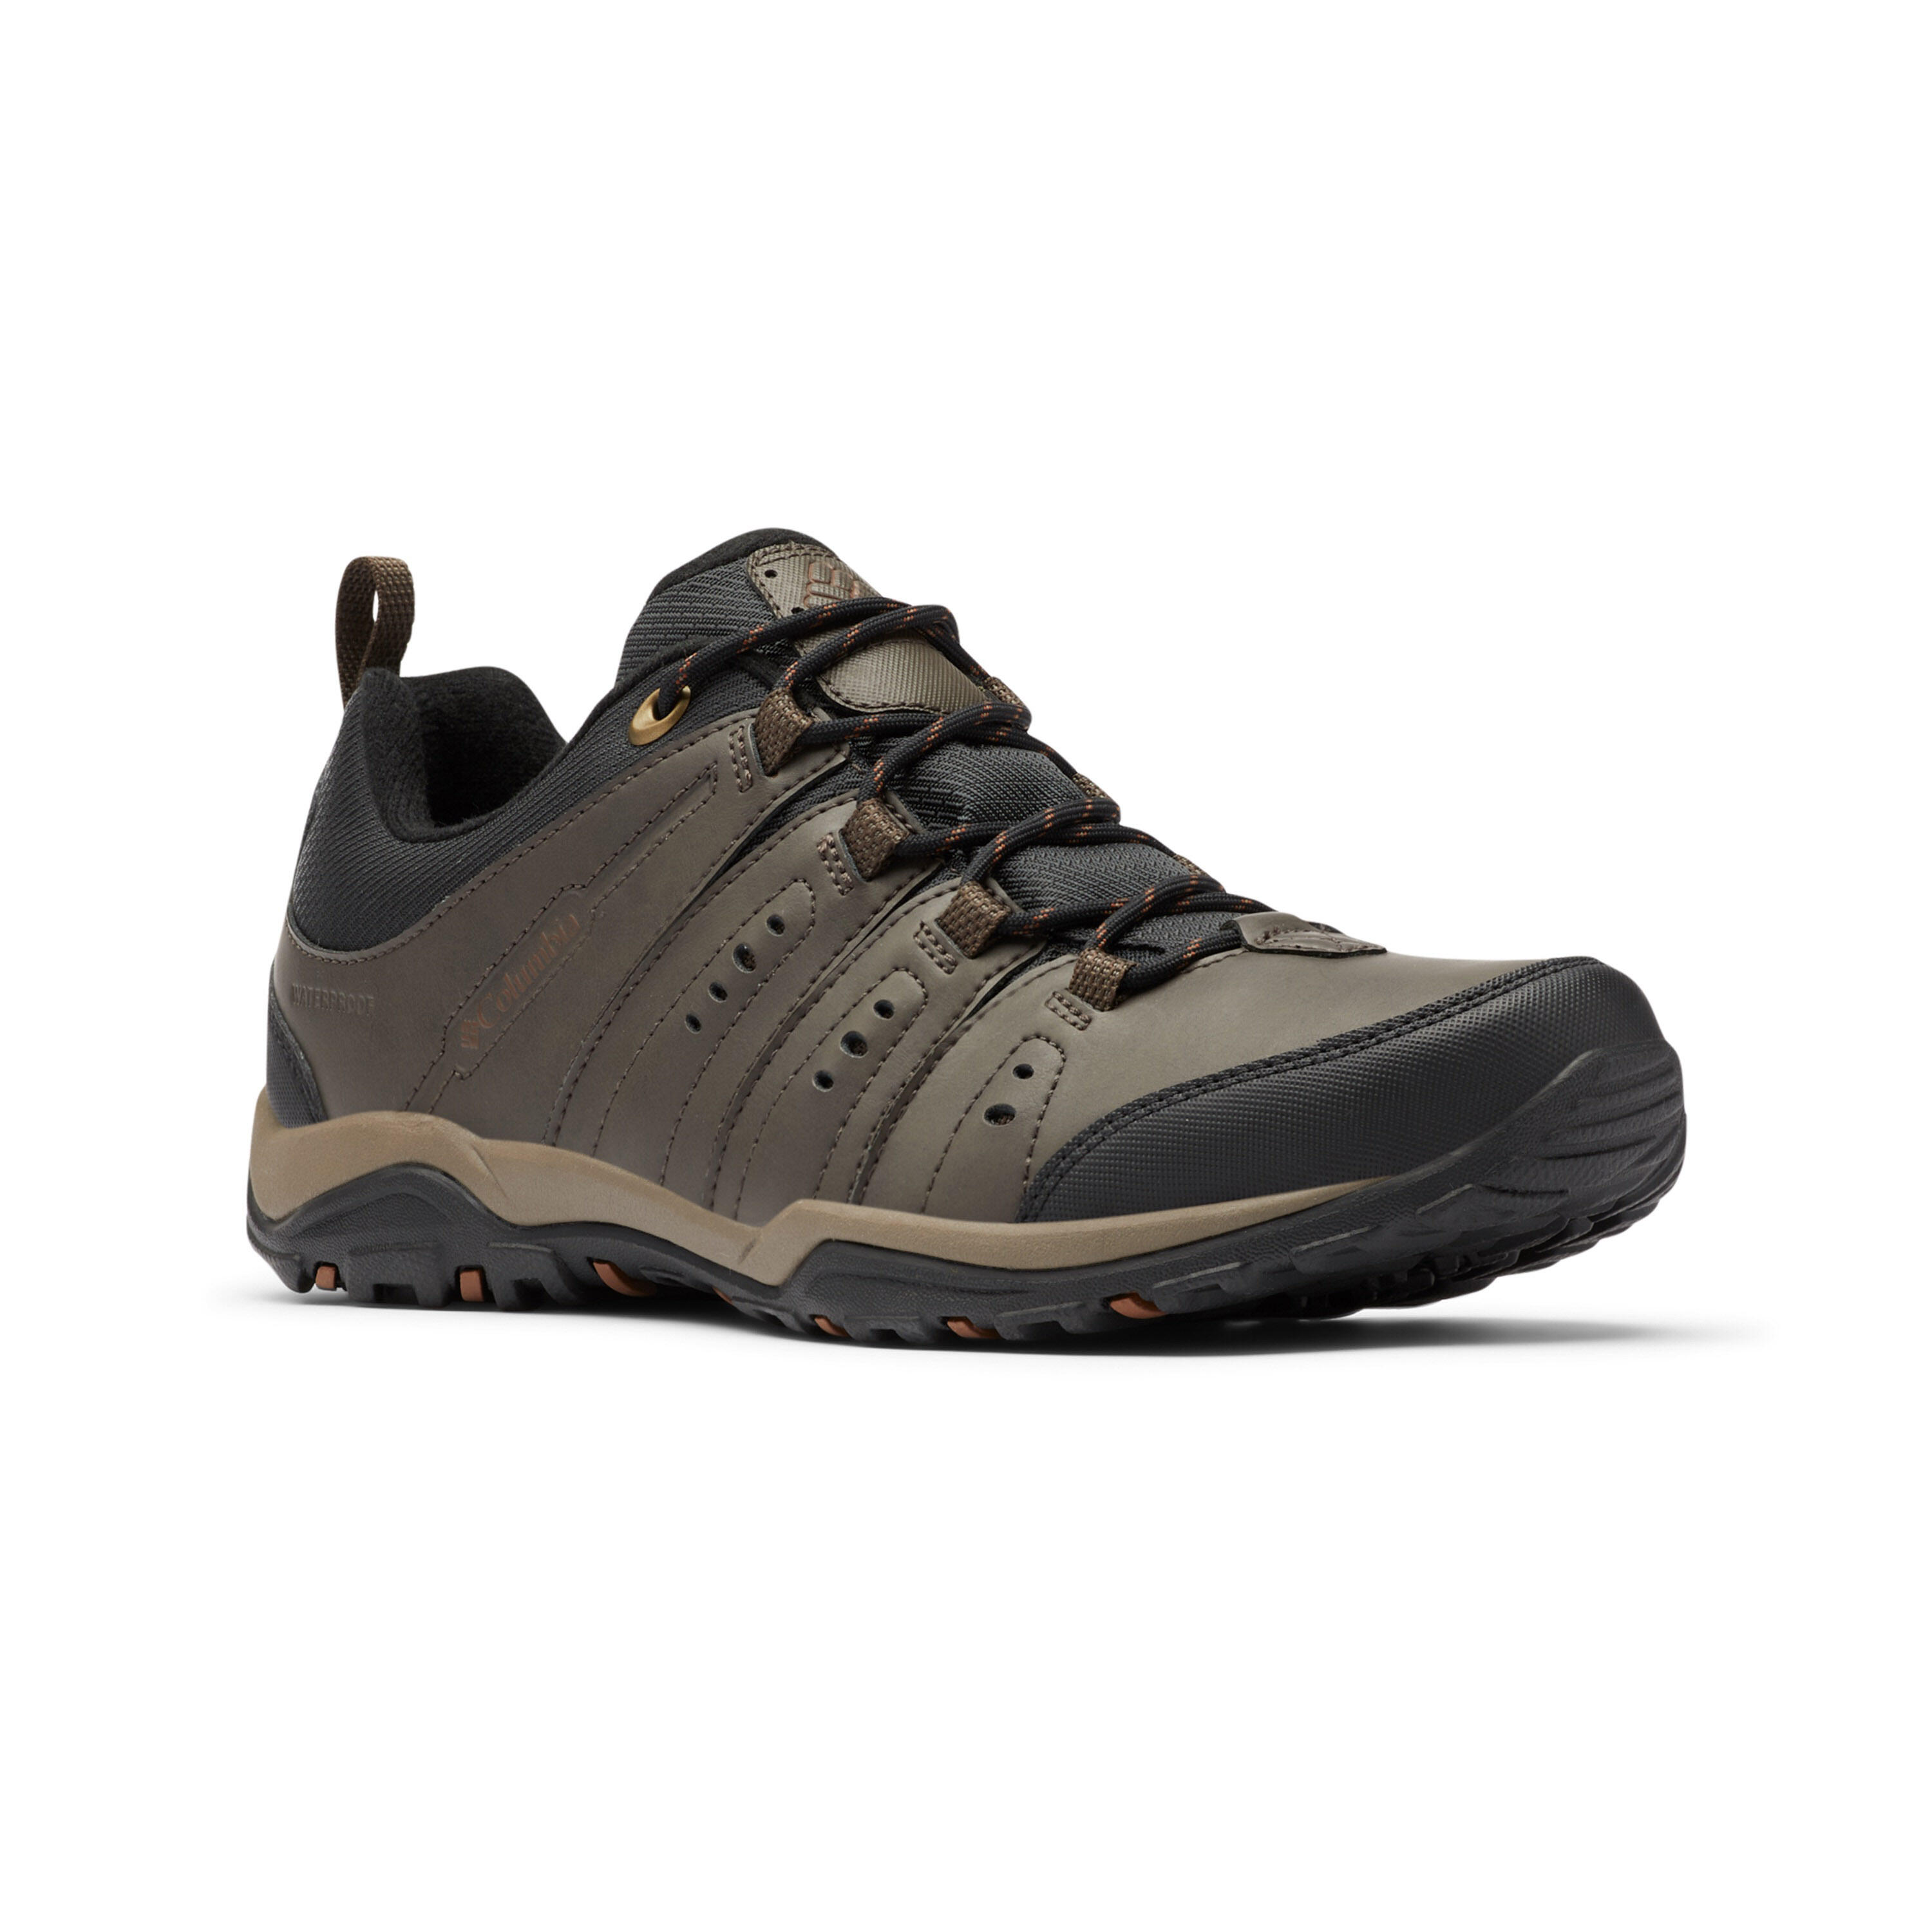 Columbia Men's Waterproof Leather Hiking Boots - Fire Venture